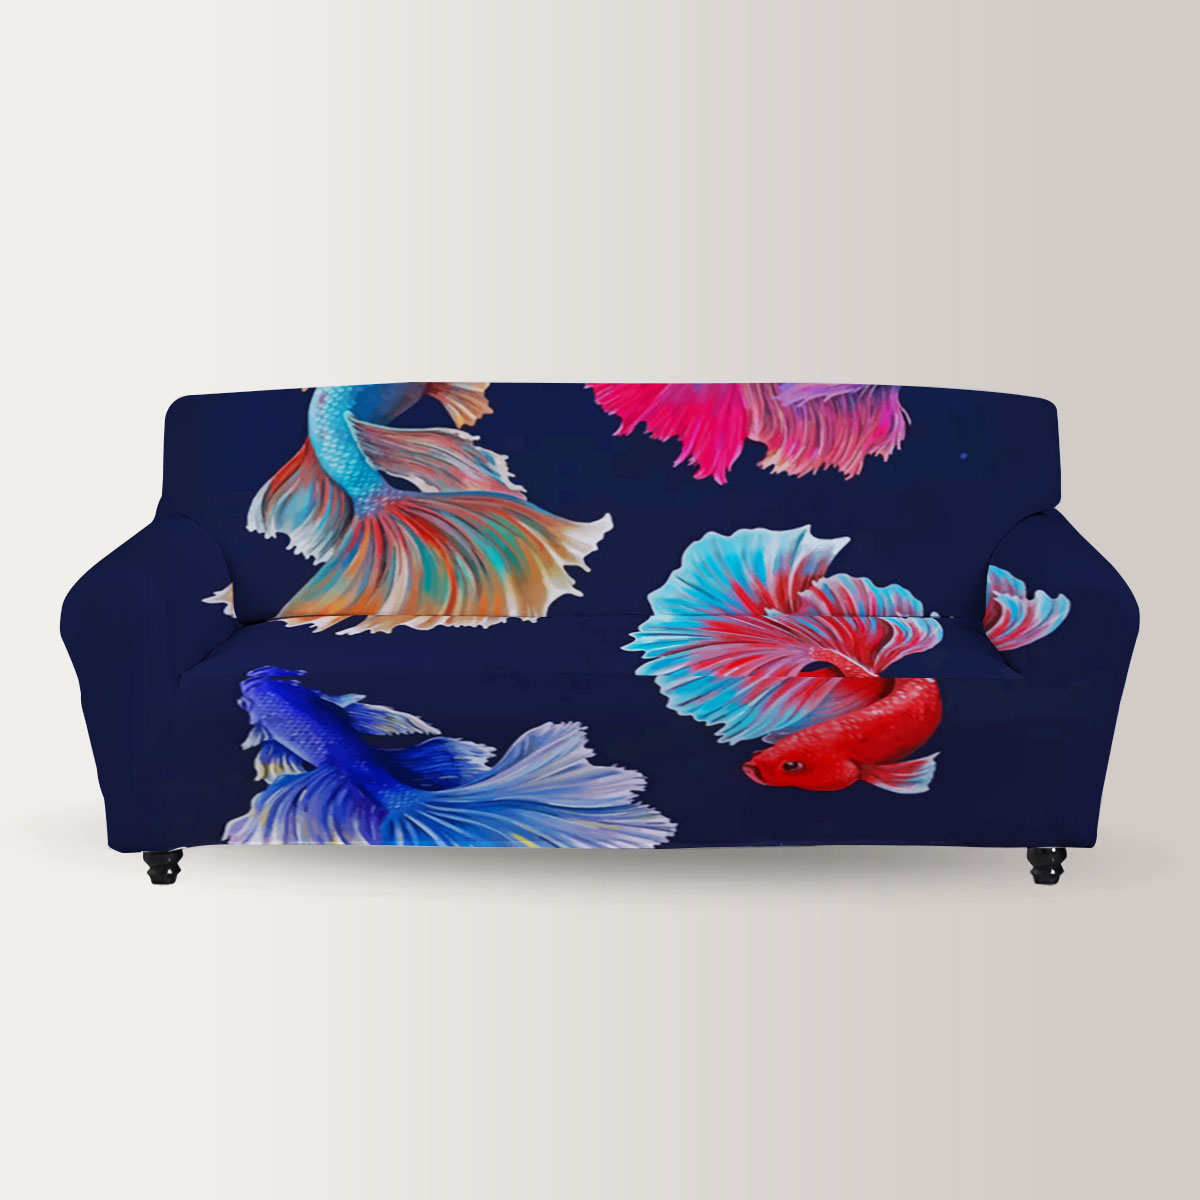 Iconic Four Betta Fish Sofa Cover